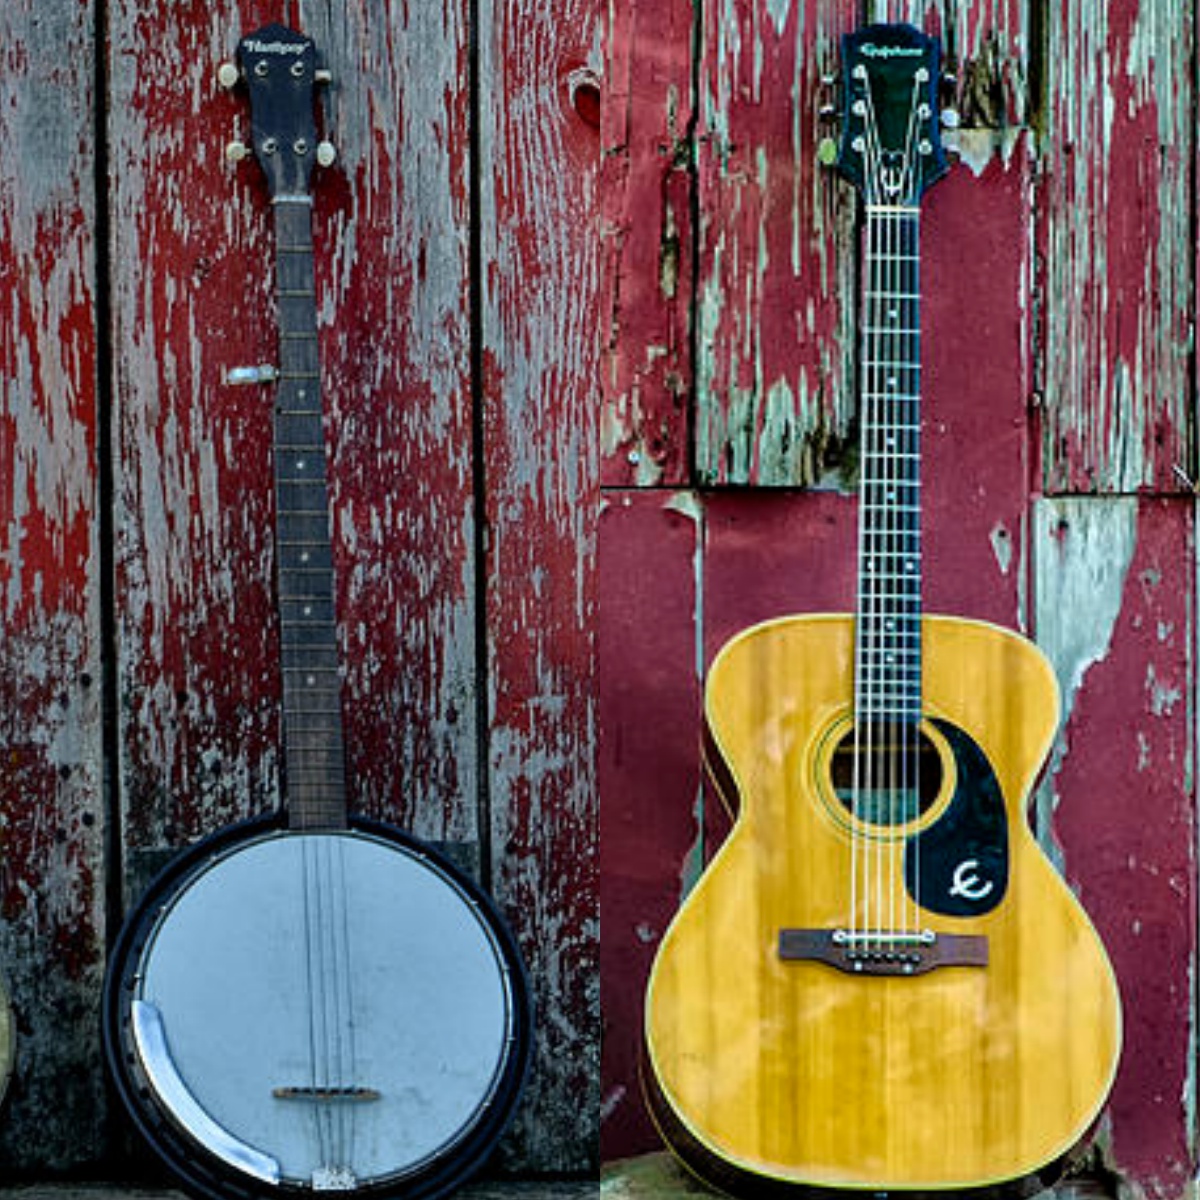 Banjo or guitar?